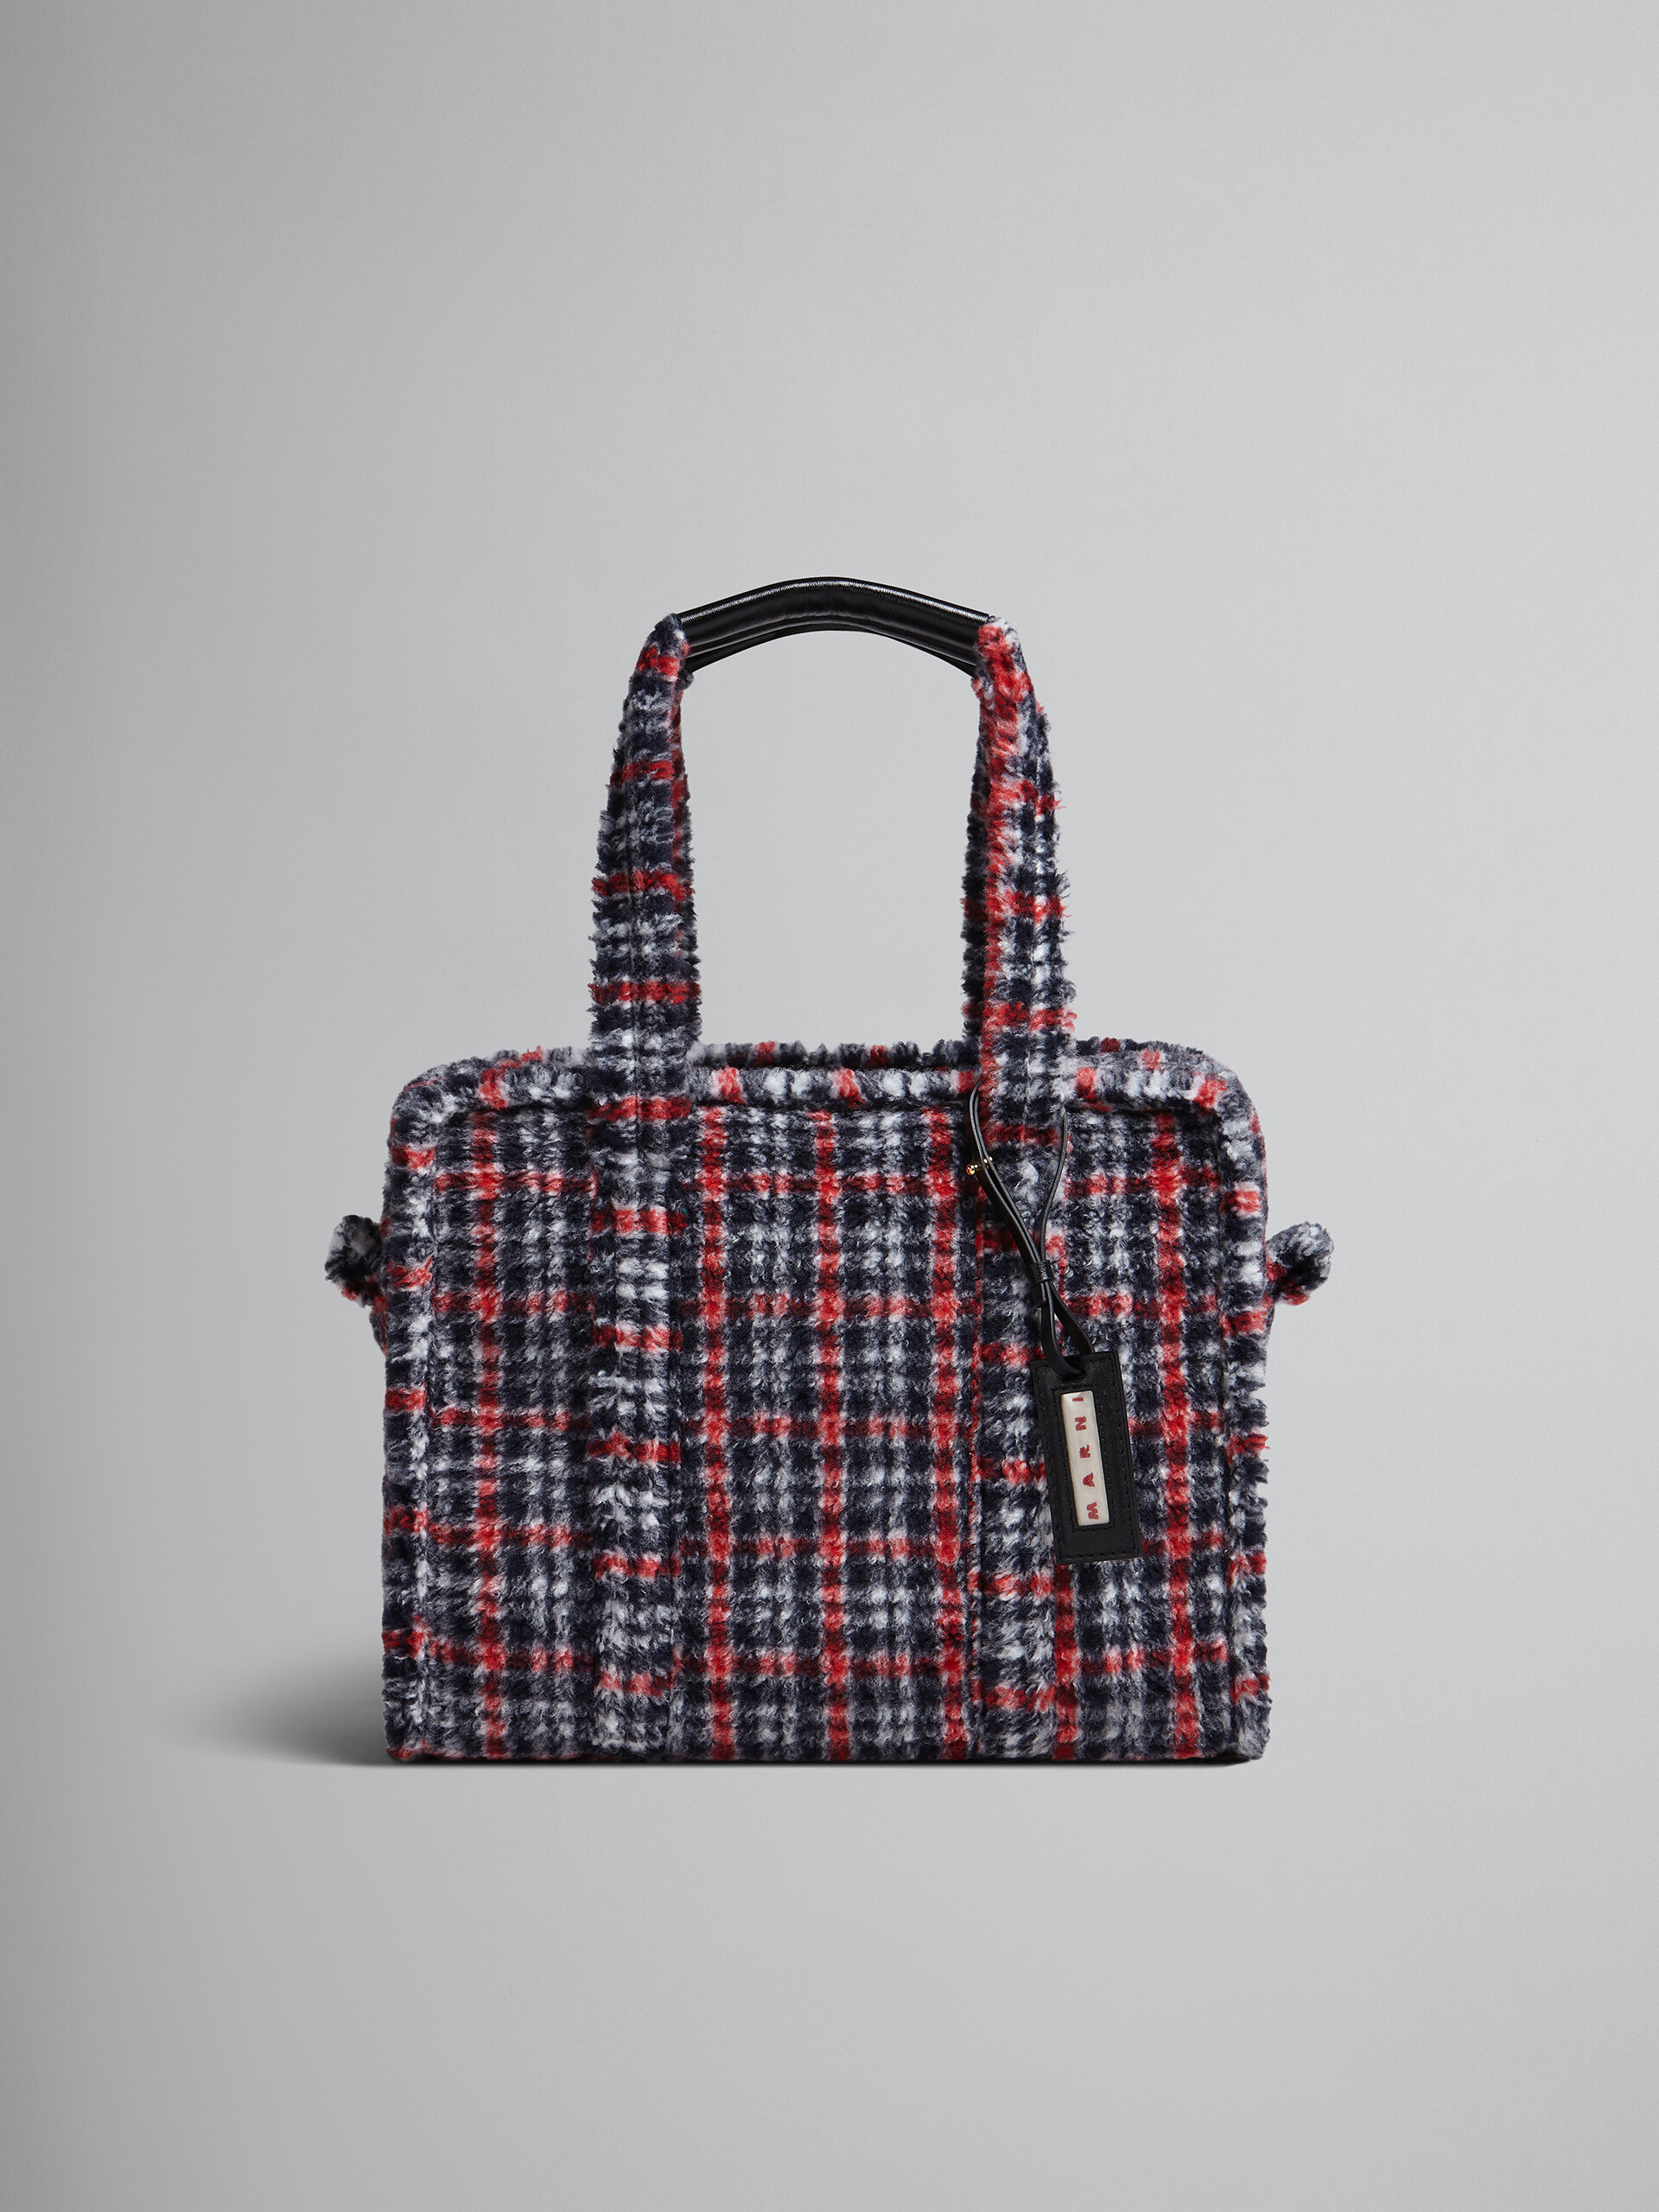 Travel bag piccola in tessuto check - Borse shopping - Image 1